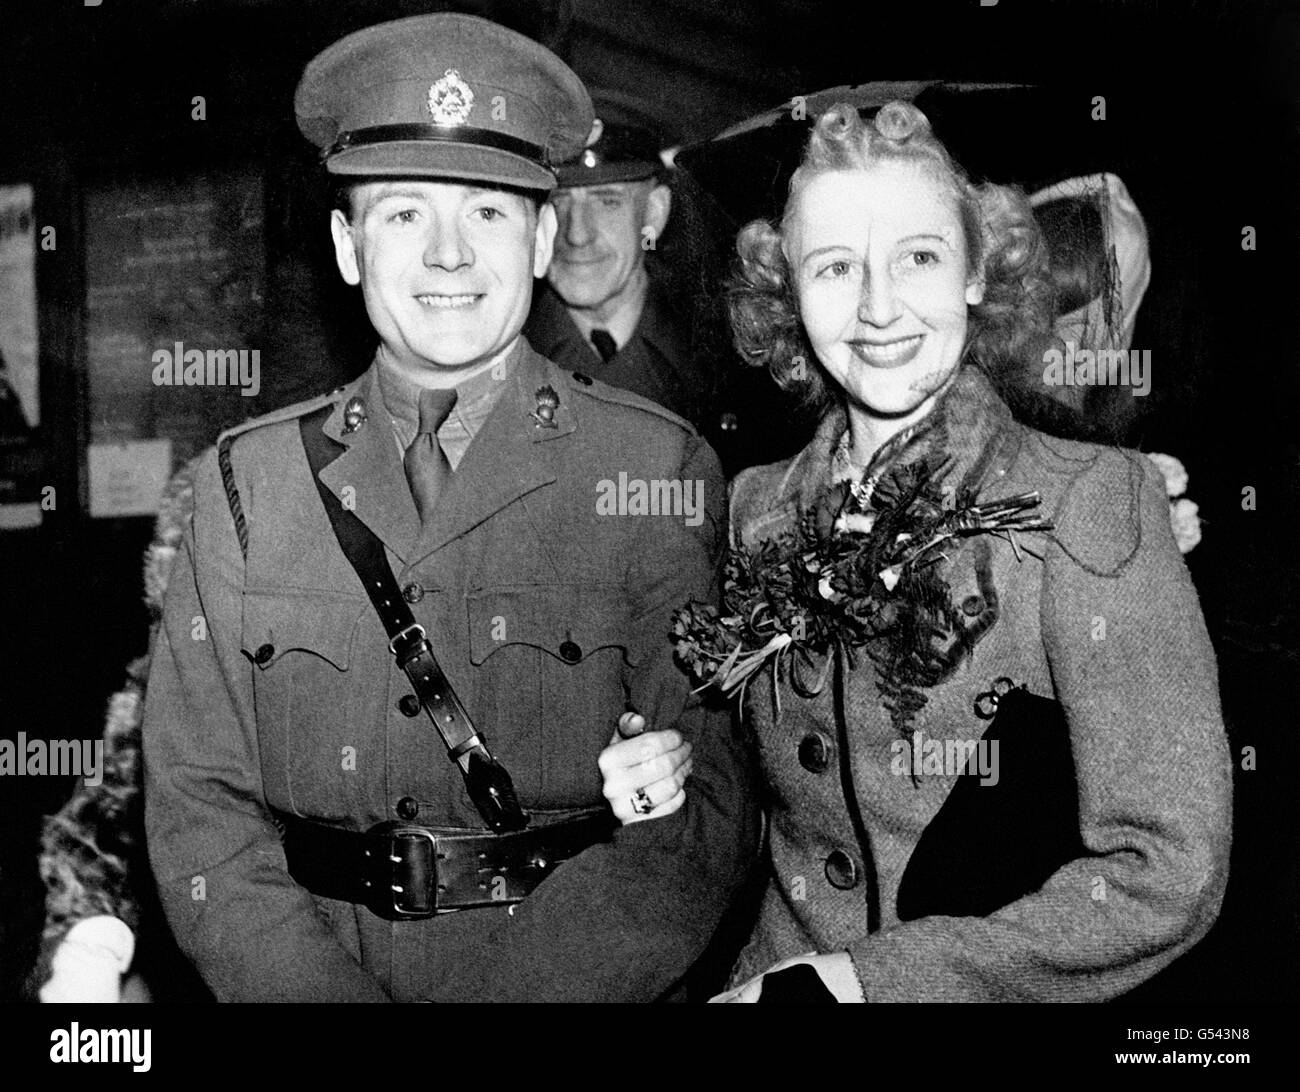 World War Two - British Empire - The Home Front - Celebrities - John Mills - 1941 Stock Photo